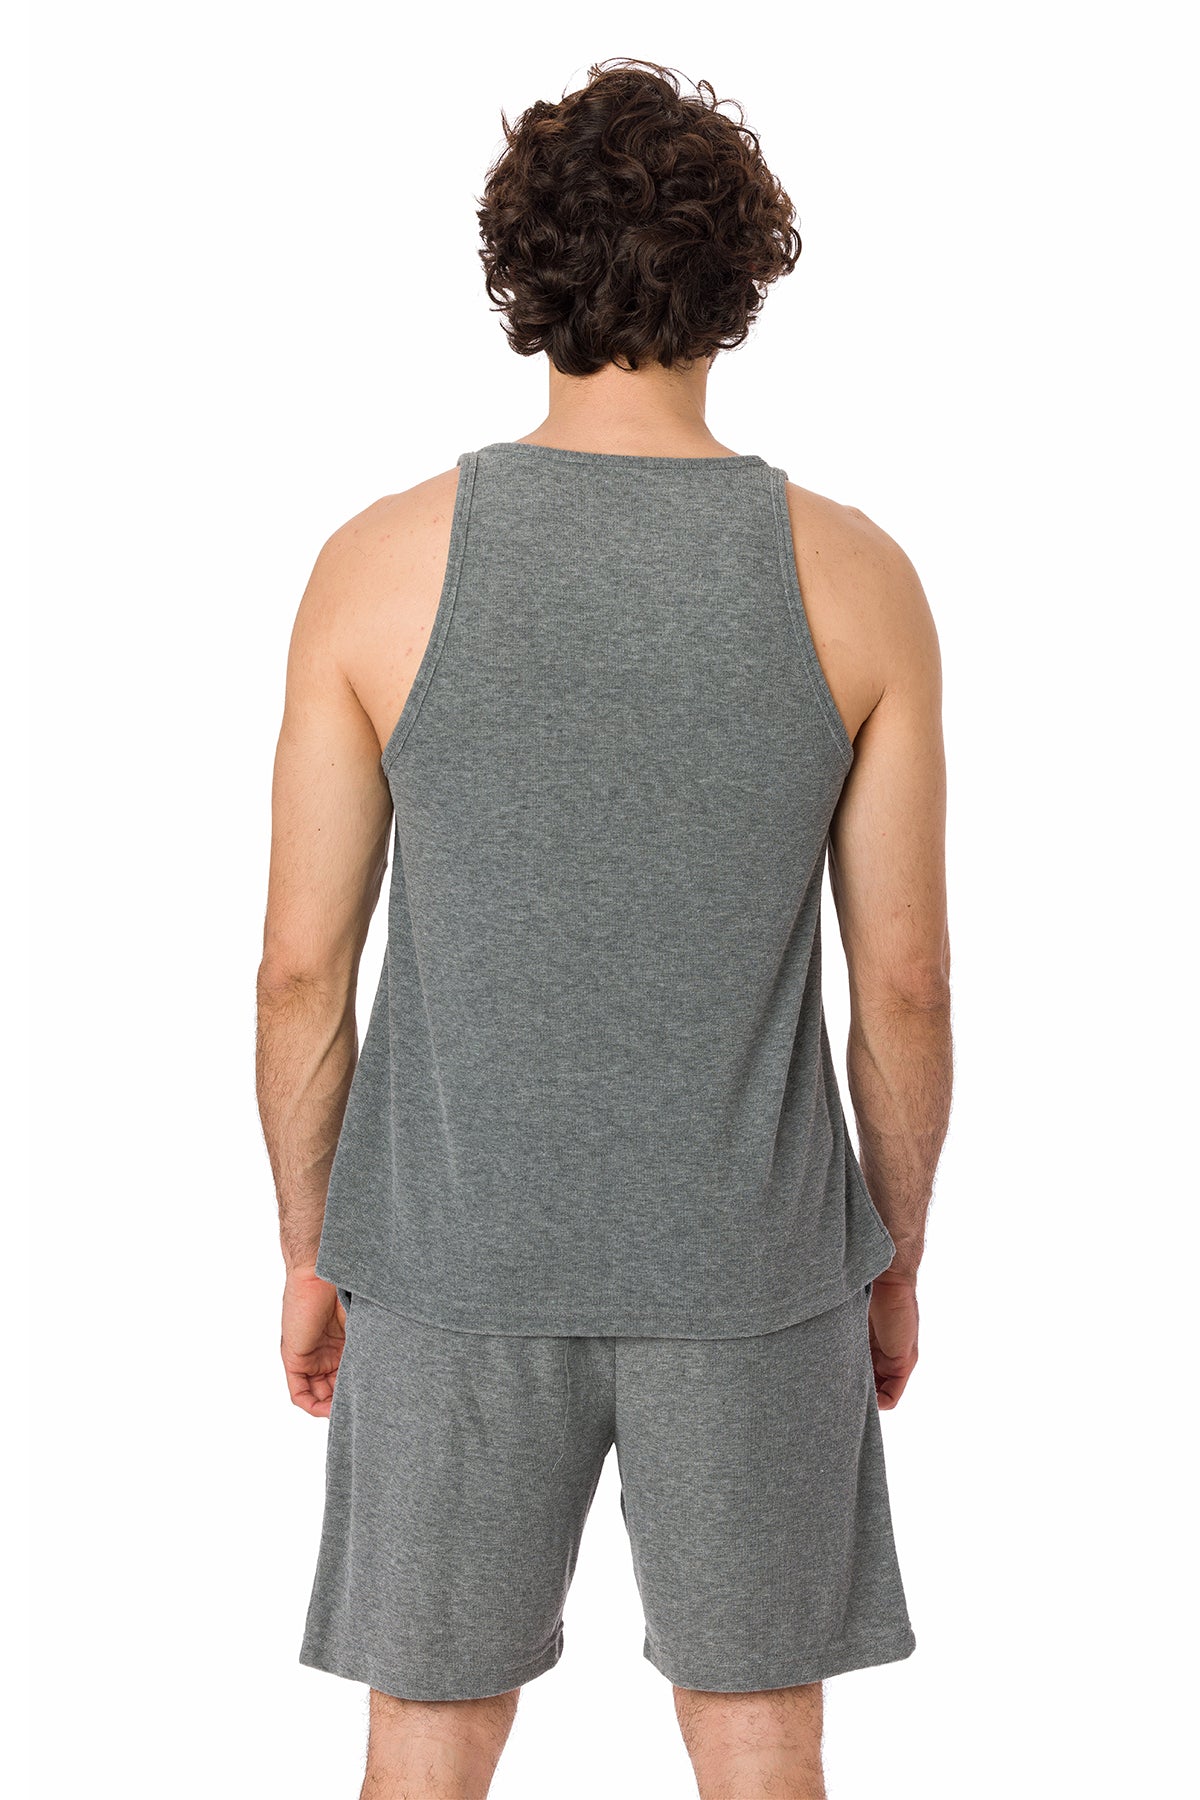 Suvi NYC Men's 2-Set Shorts 100% Turkish Terry cotton 2 Side Pockets Gym. Work Out. Yoga, Fitness. Pajama set.